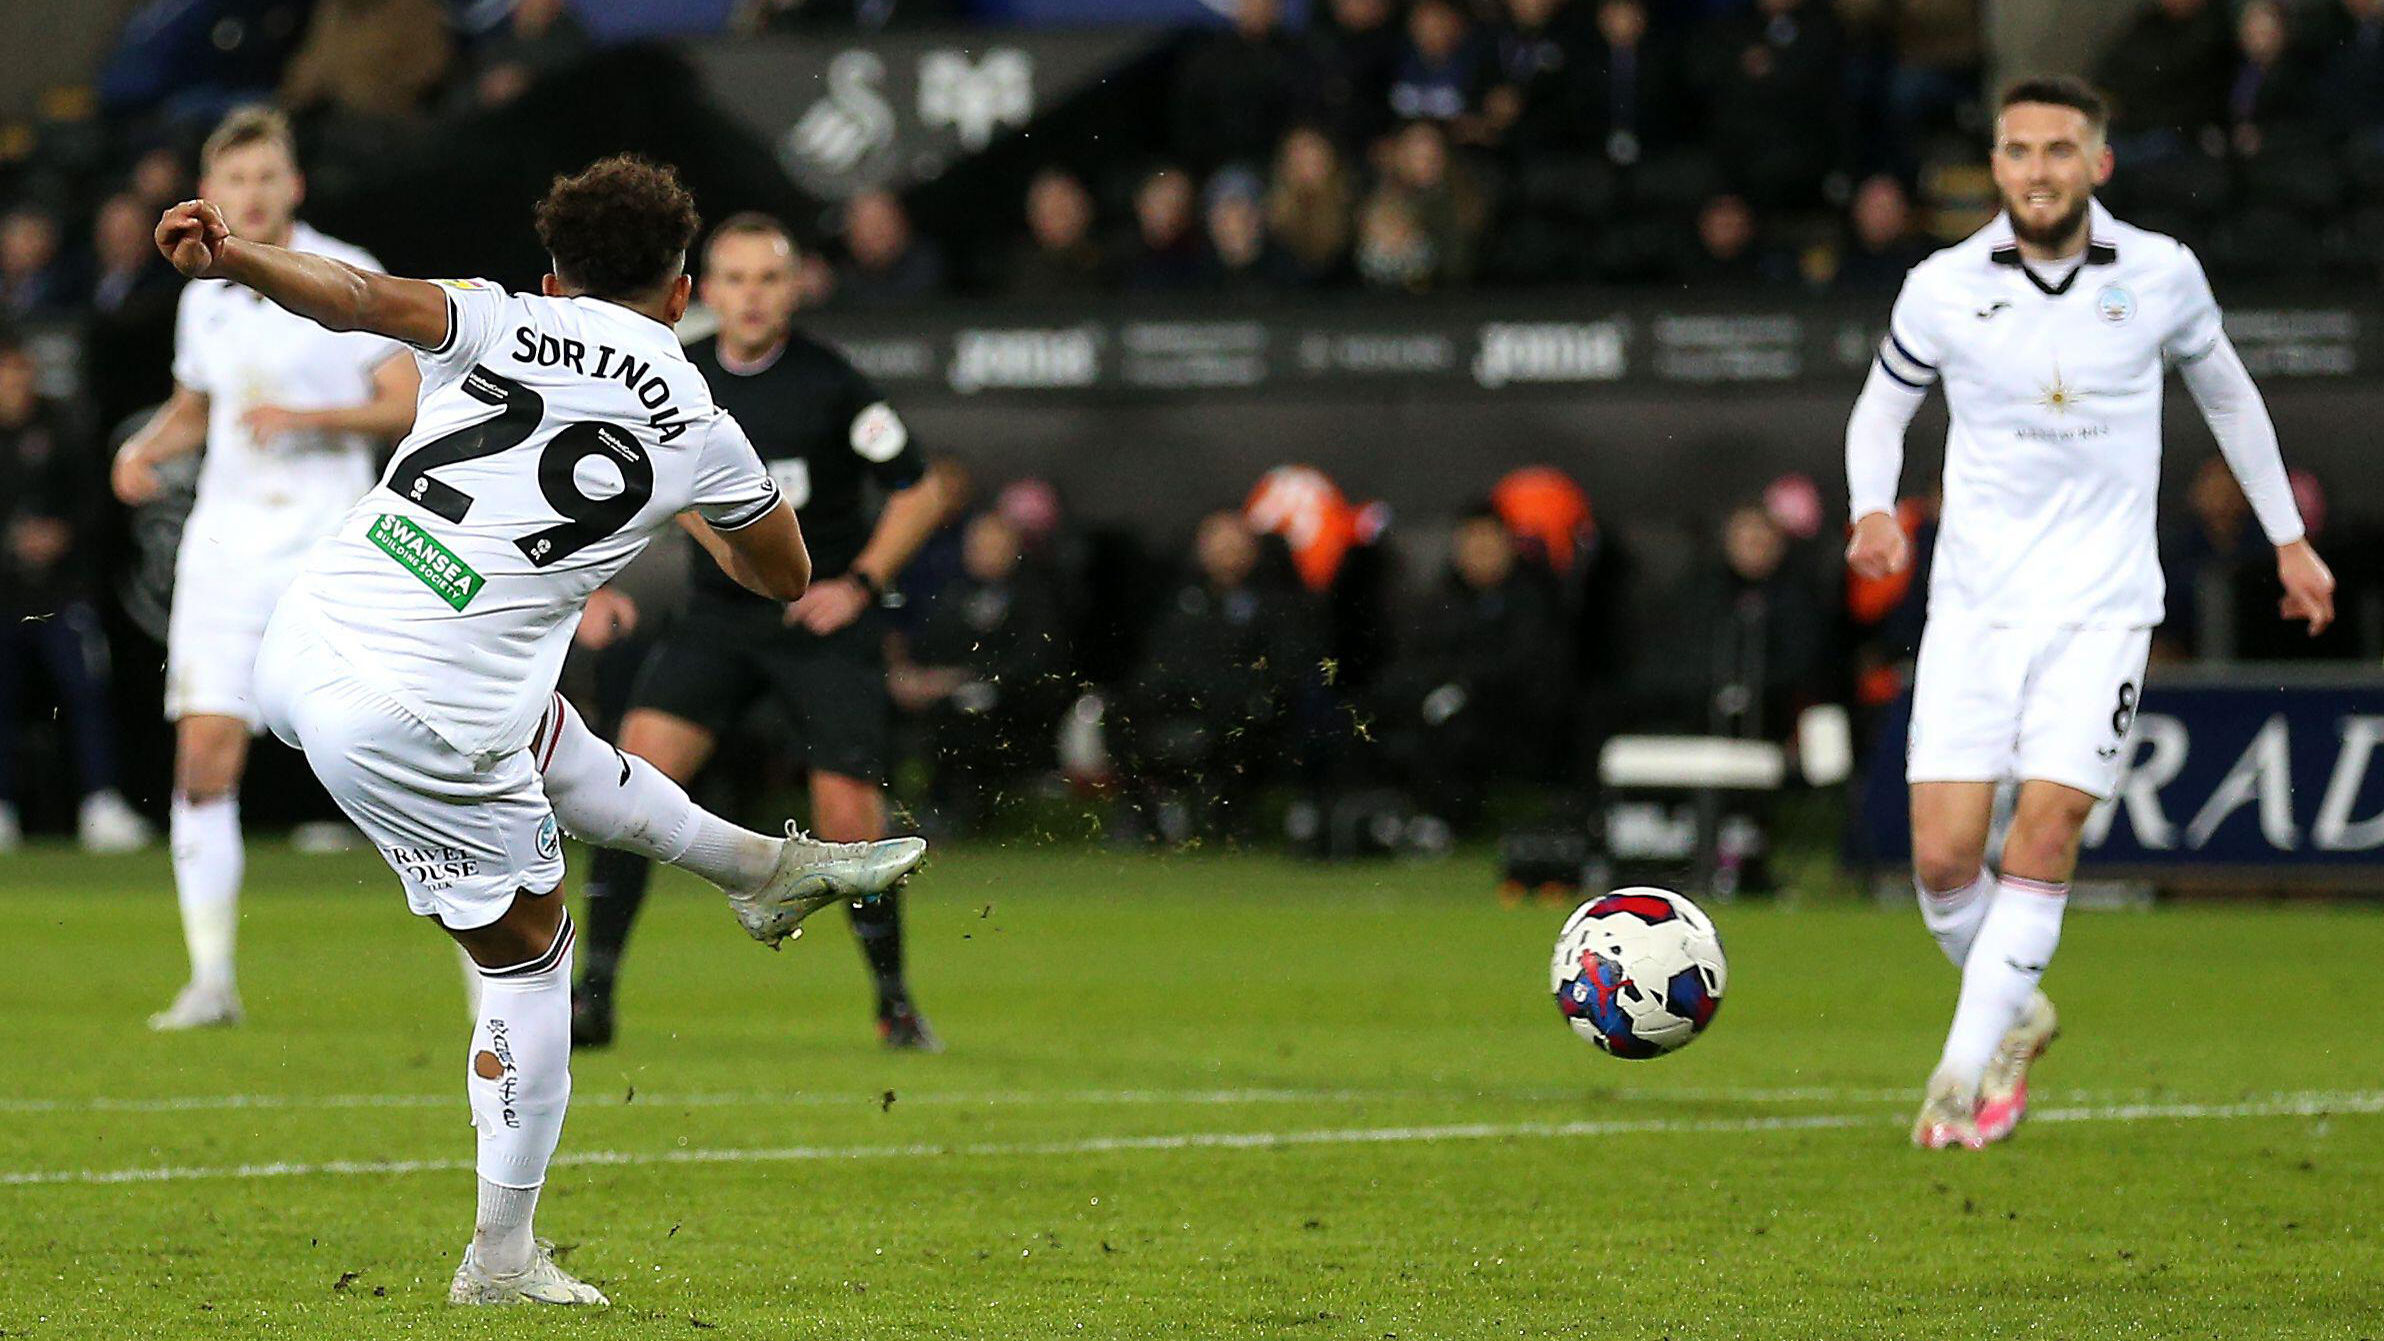 Matty Sorinola | Getting the three points was key | Swansea